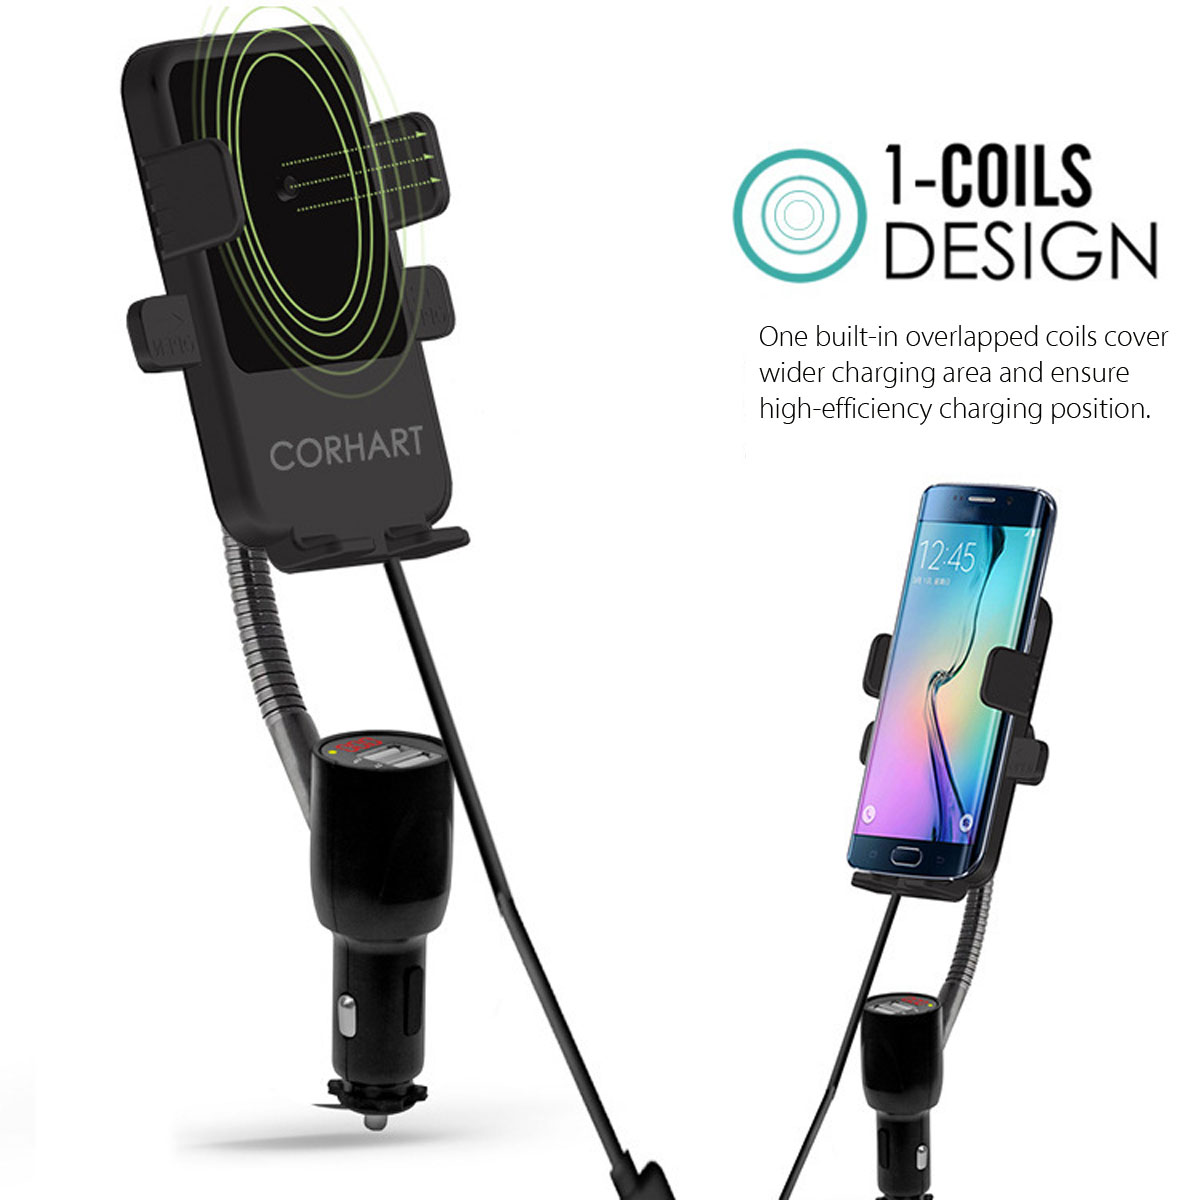 Qi-Wireless-Charger-Dual-USB-Car-Cig-arette-Lighter-Holder-For-i-Phone-Sam-sungder-1157842